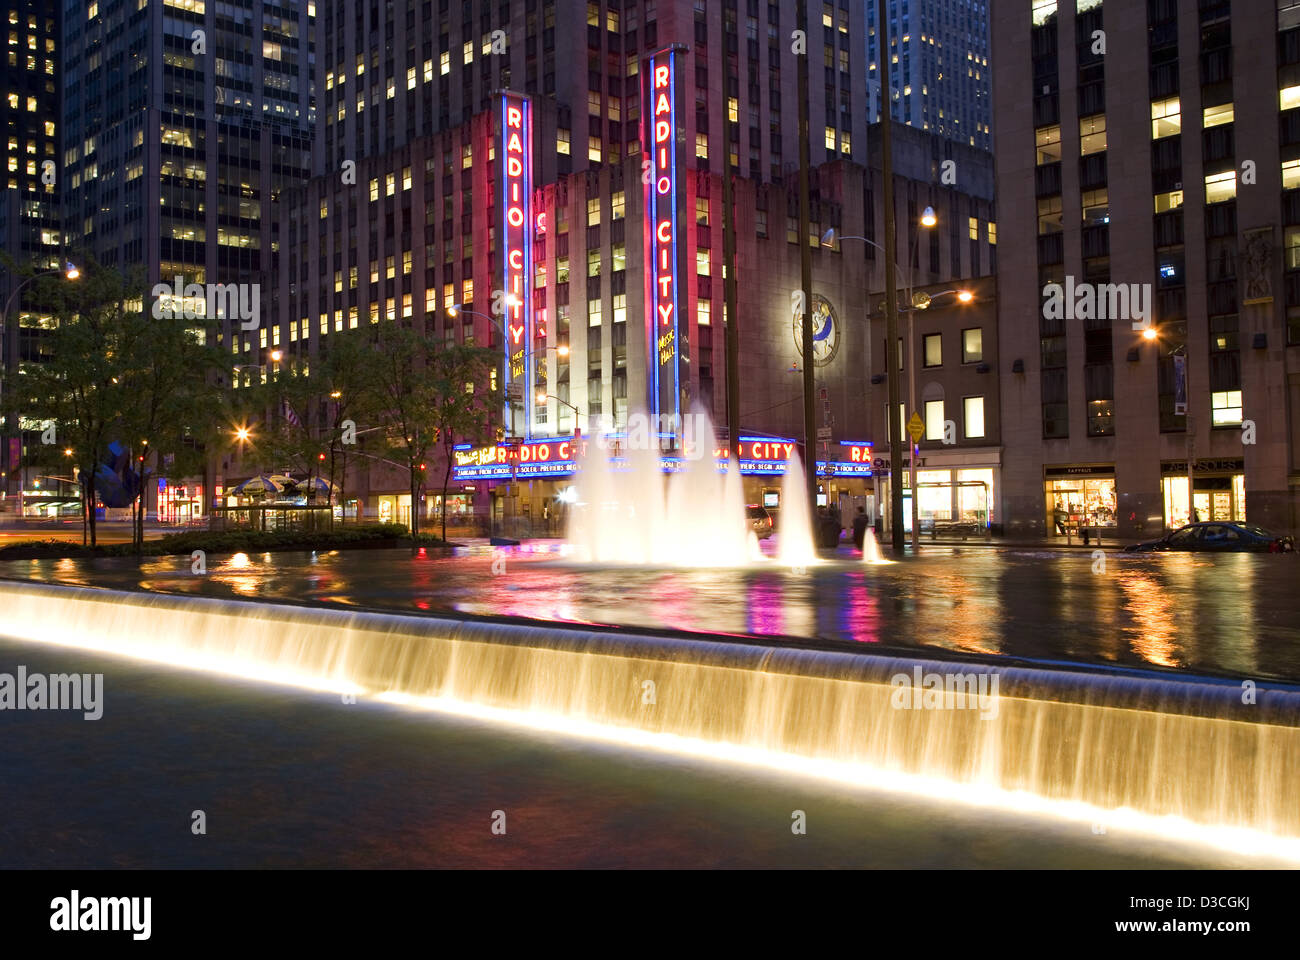 Radio City Music Hall di New York, Stati Uniti d'America Foto Stock